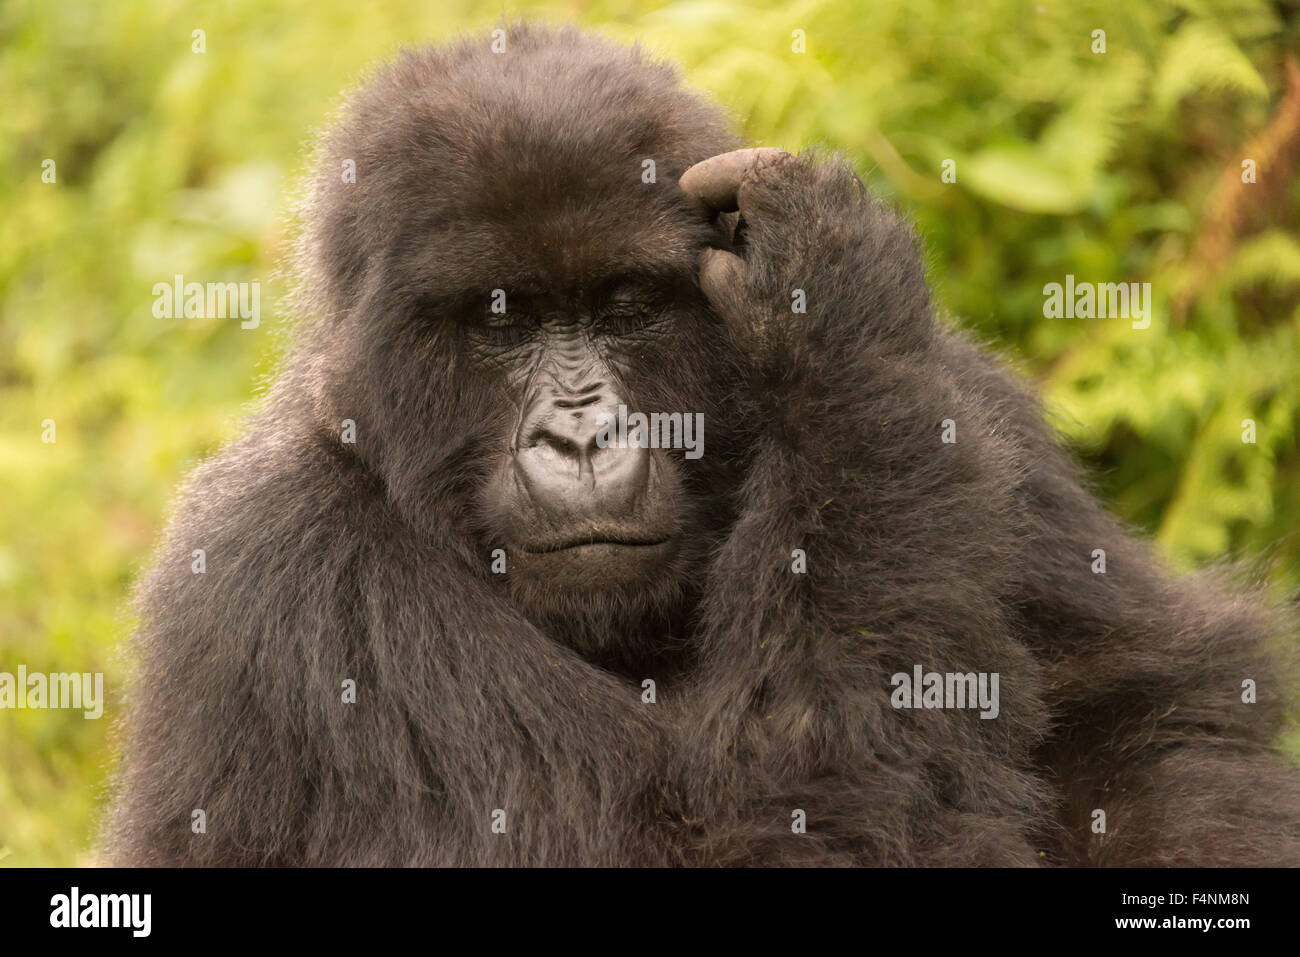 https://c8.alamy.com/comp/F4NM8N/gorilla-scratches-its-head-with-eyes-closed-F4NM8N.jpg